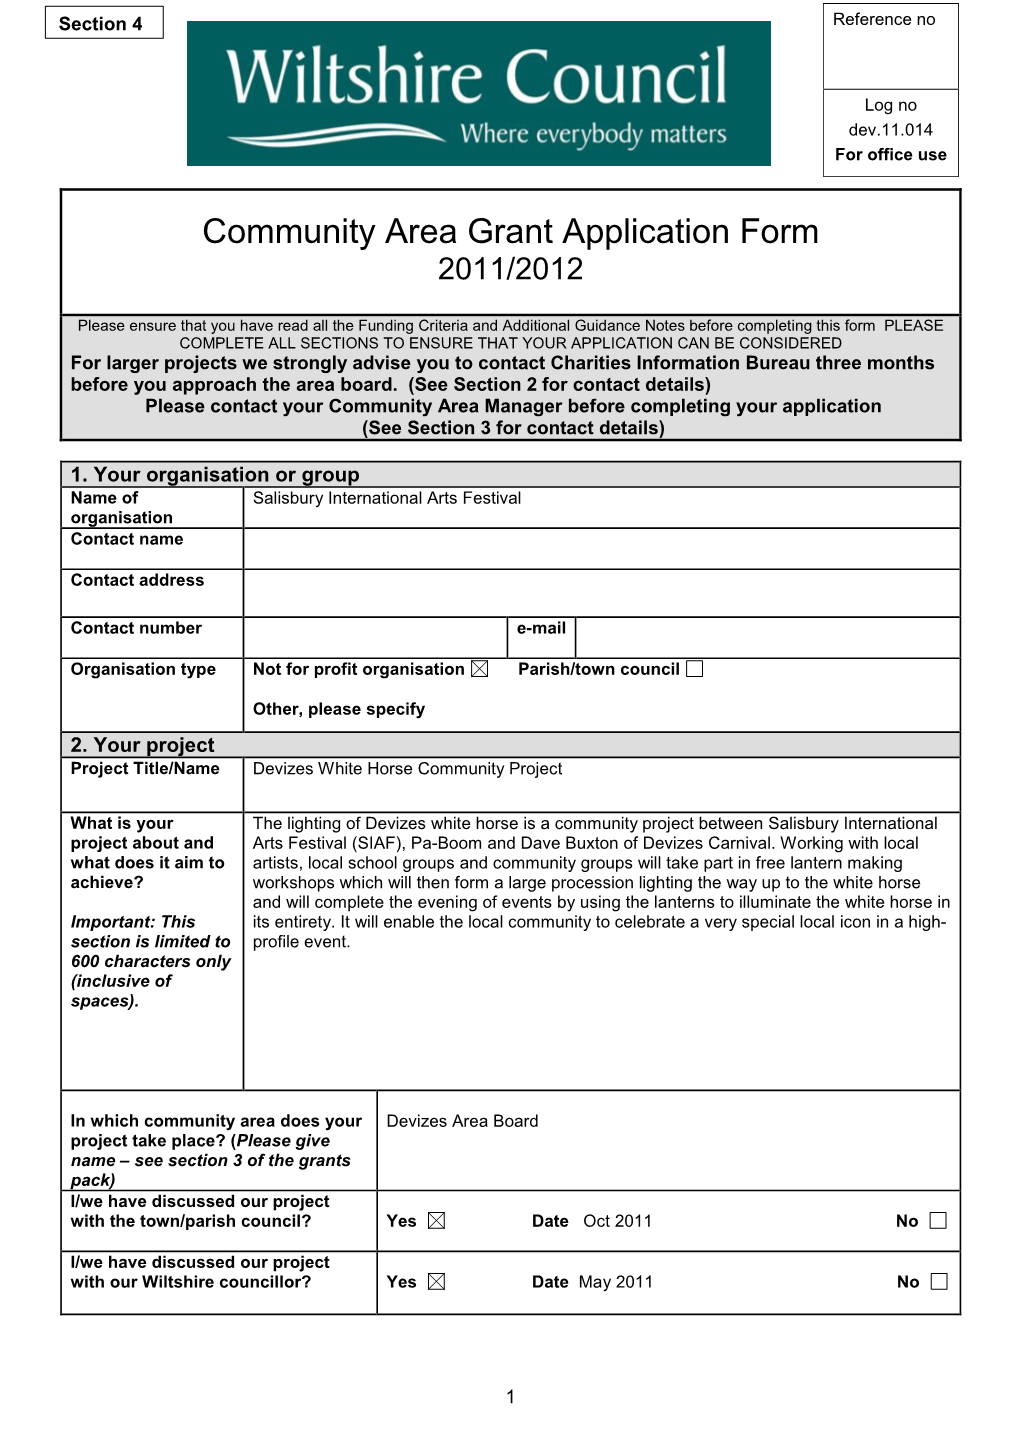 Community Area Grant Application Form 2011/2012